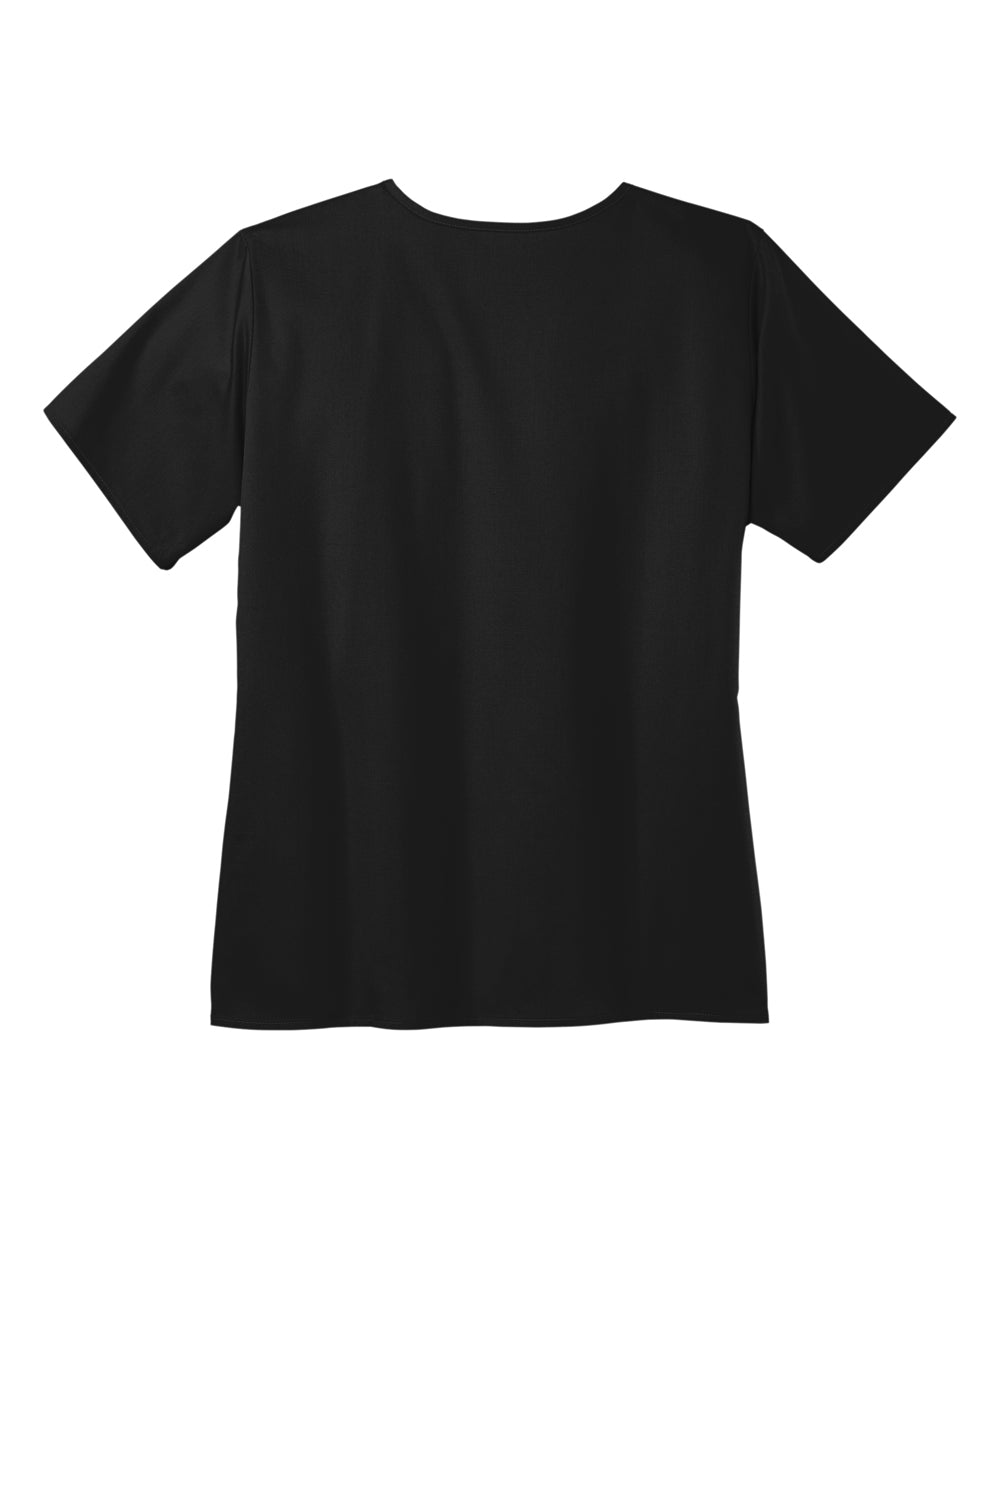 Wonderwink WW4760 WorkFlex Short Sleeve V-Neck Mock Wrap Shirt Black Flat Back